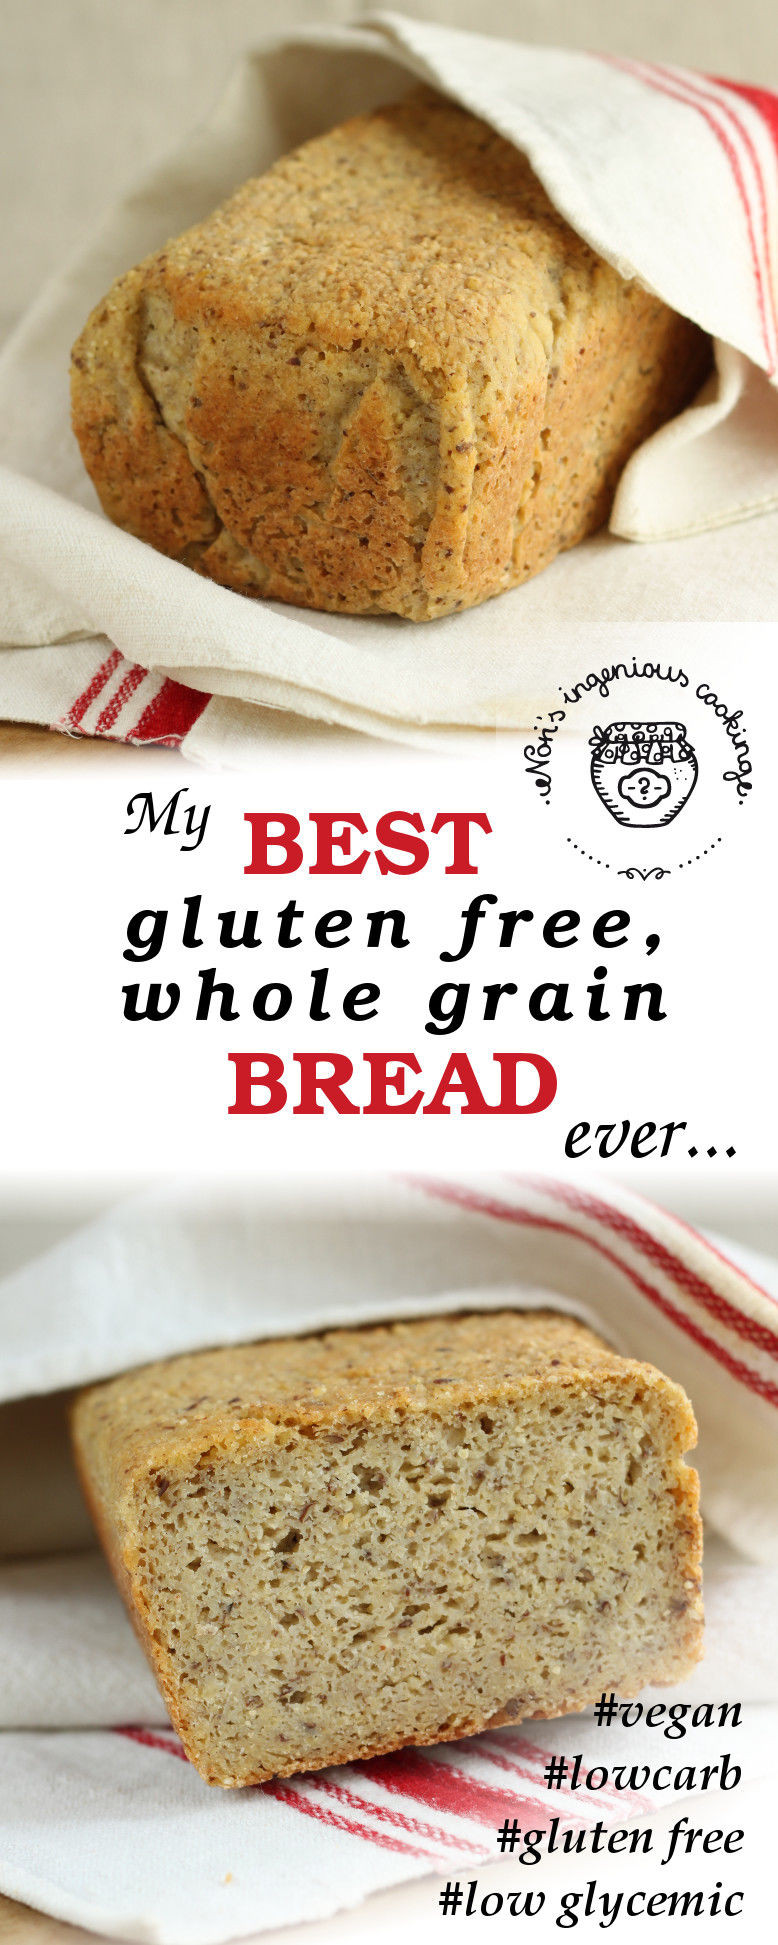 Grain Free Bread Recipe Vegans
 My best gluten free whole grain bread ever vegan